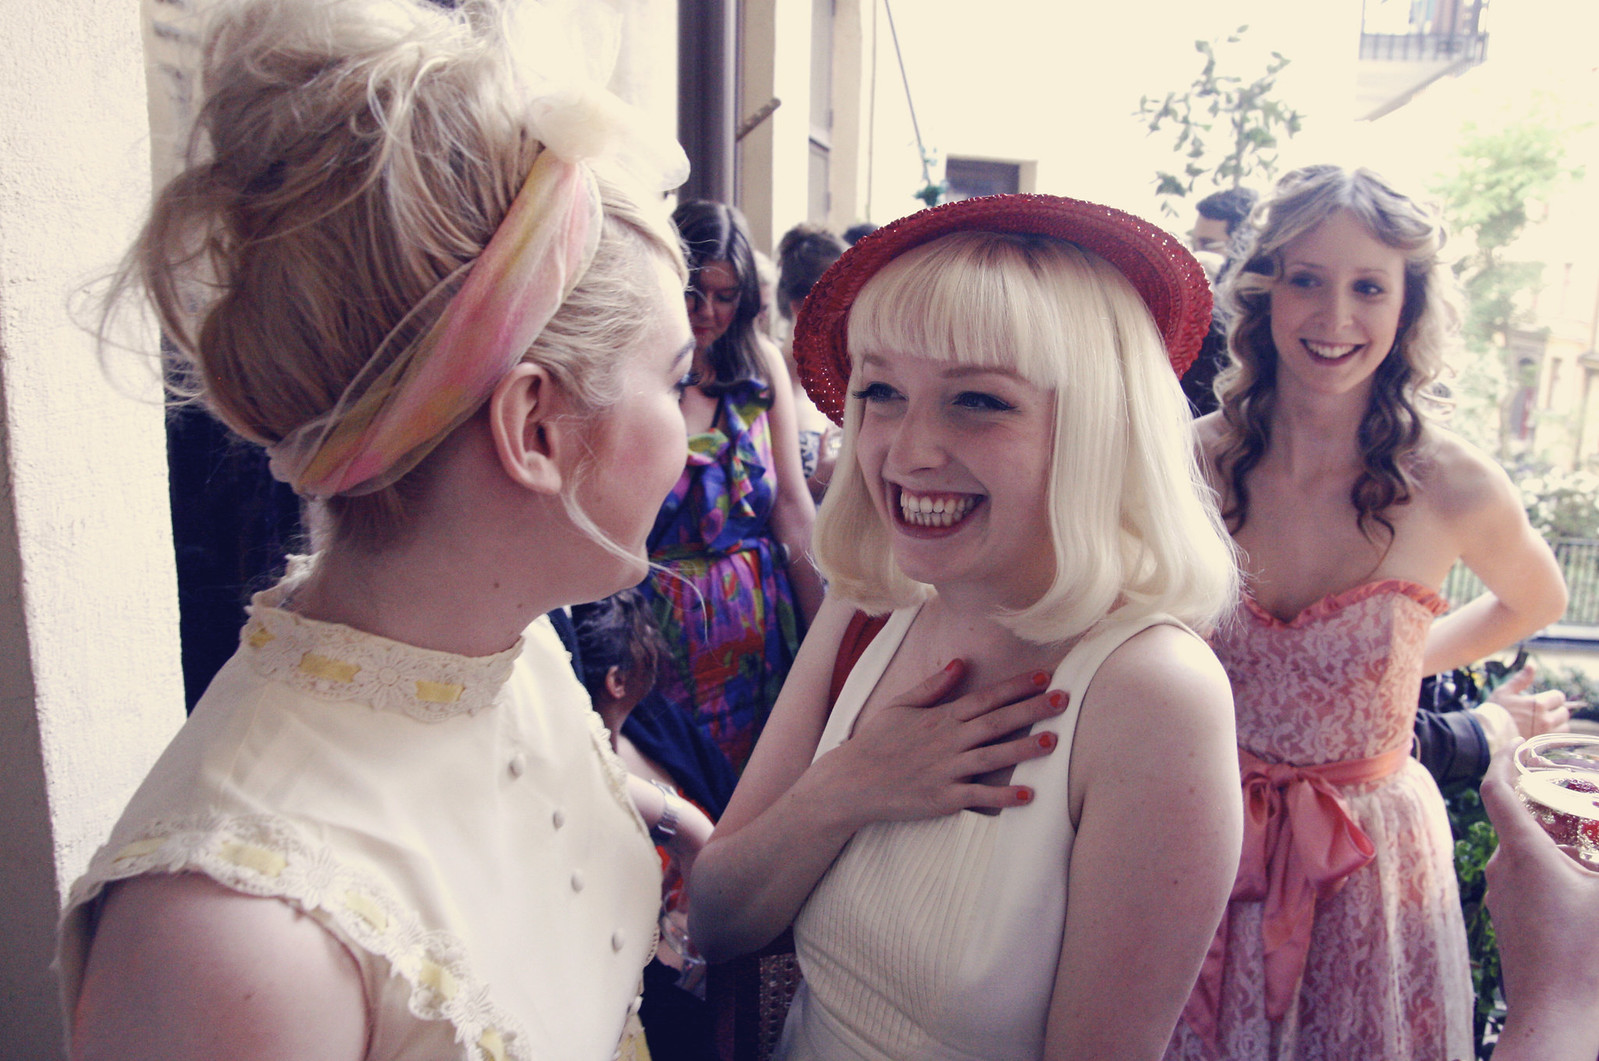 Pontus and Elsa's wedding.